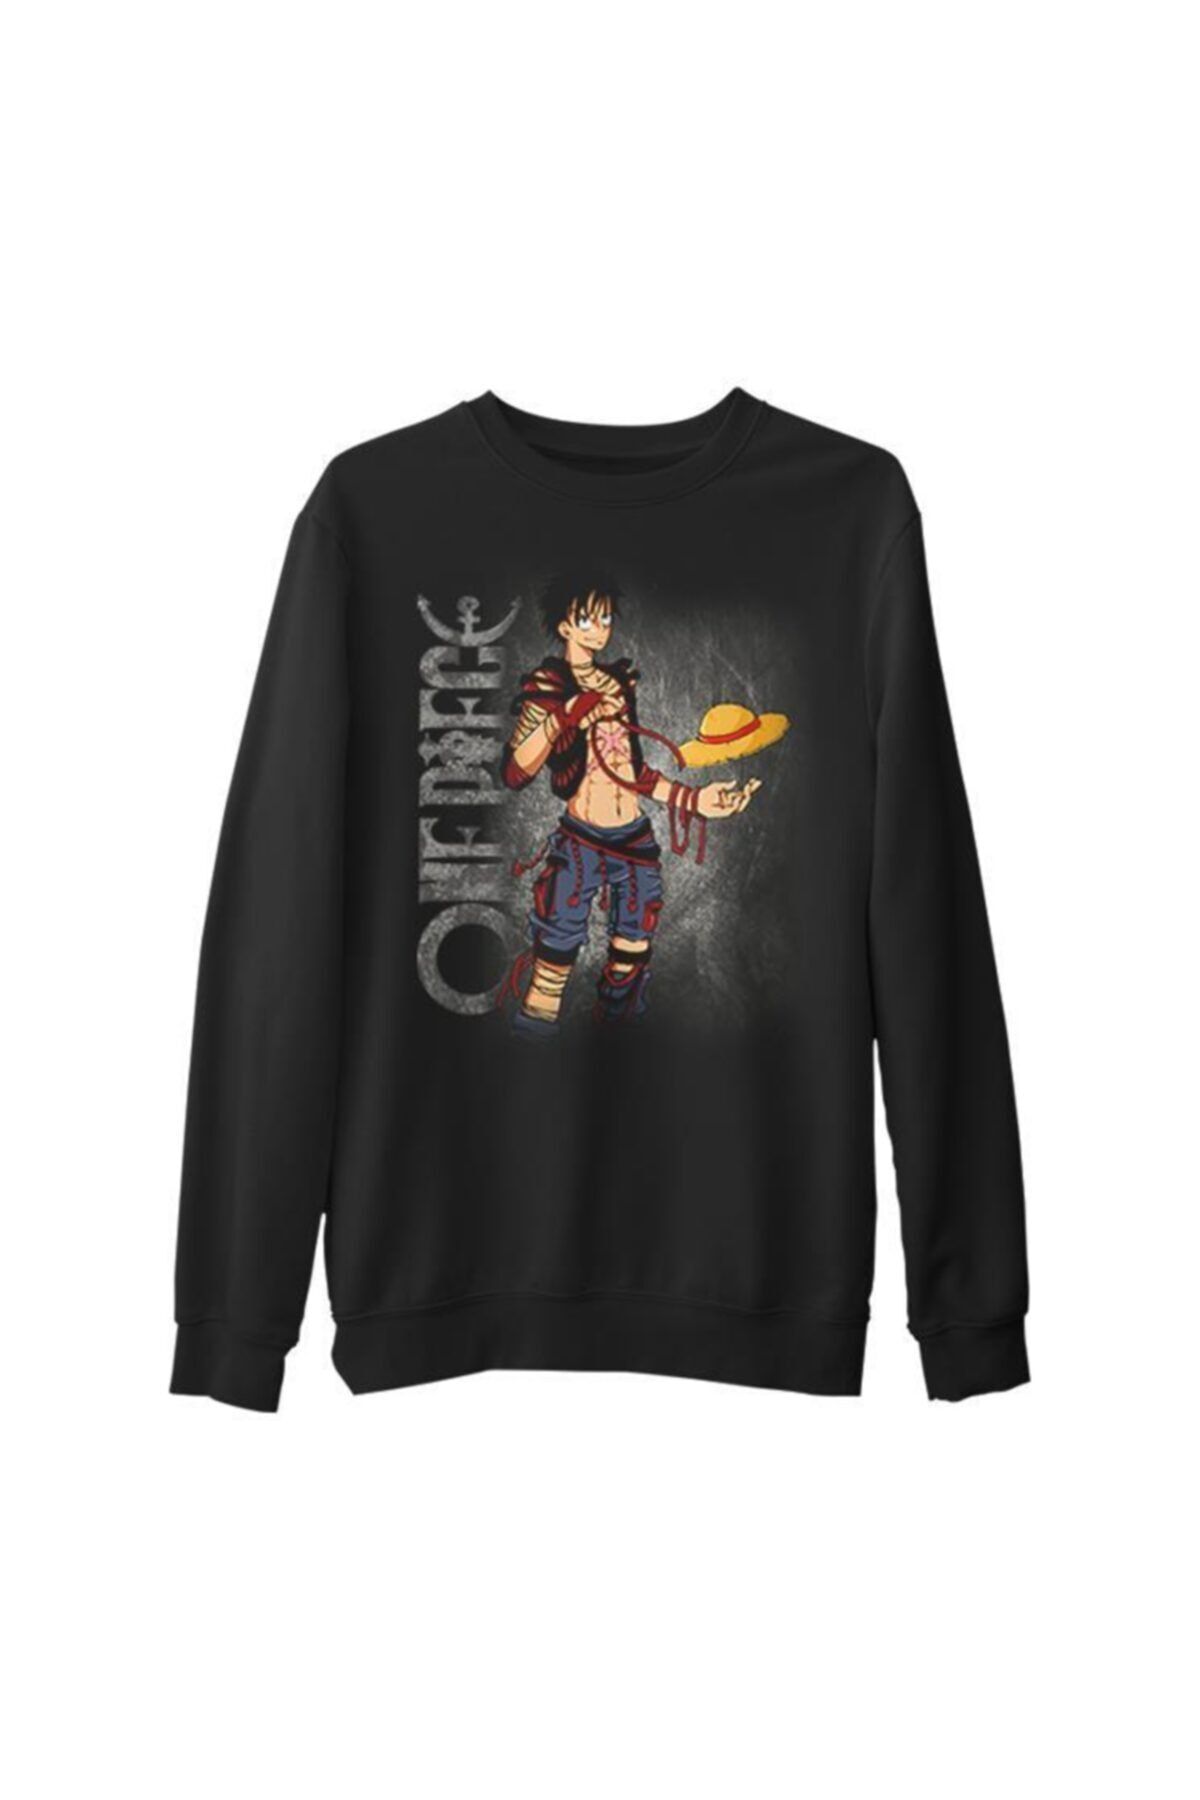 Lord T-Shirt One Piece - Luffy Siyah Erkek Kalın Sweatshirt